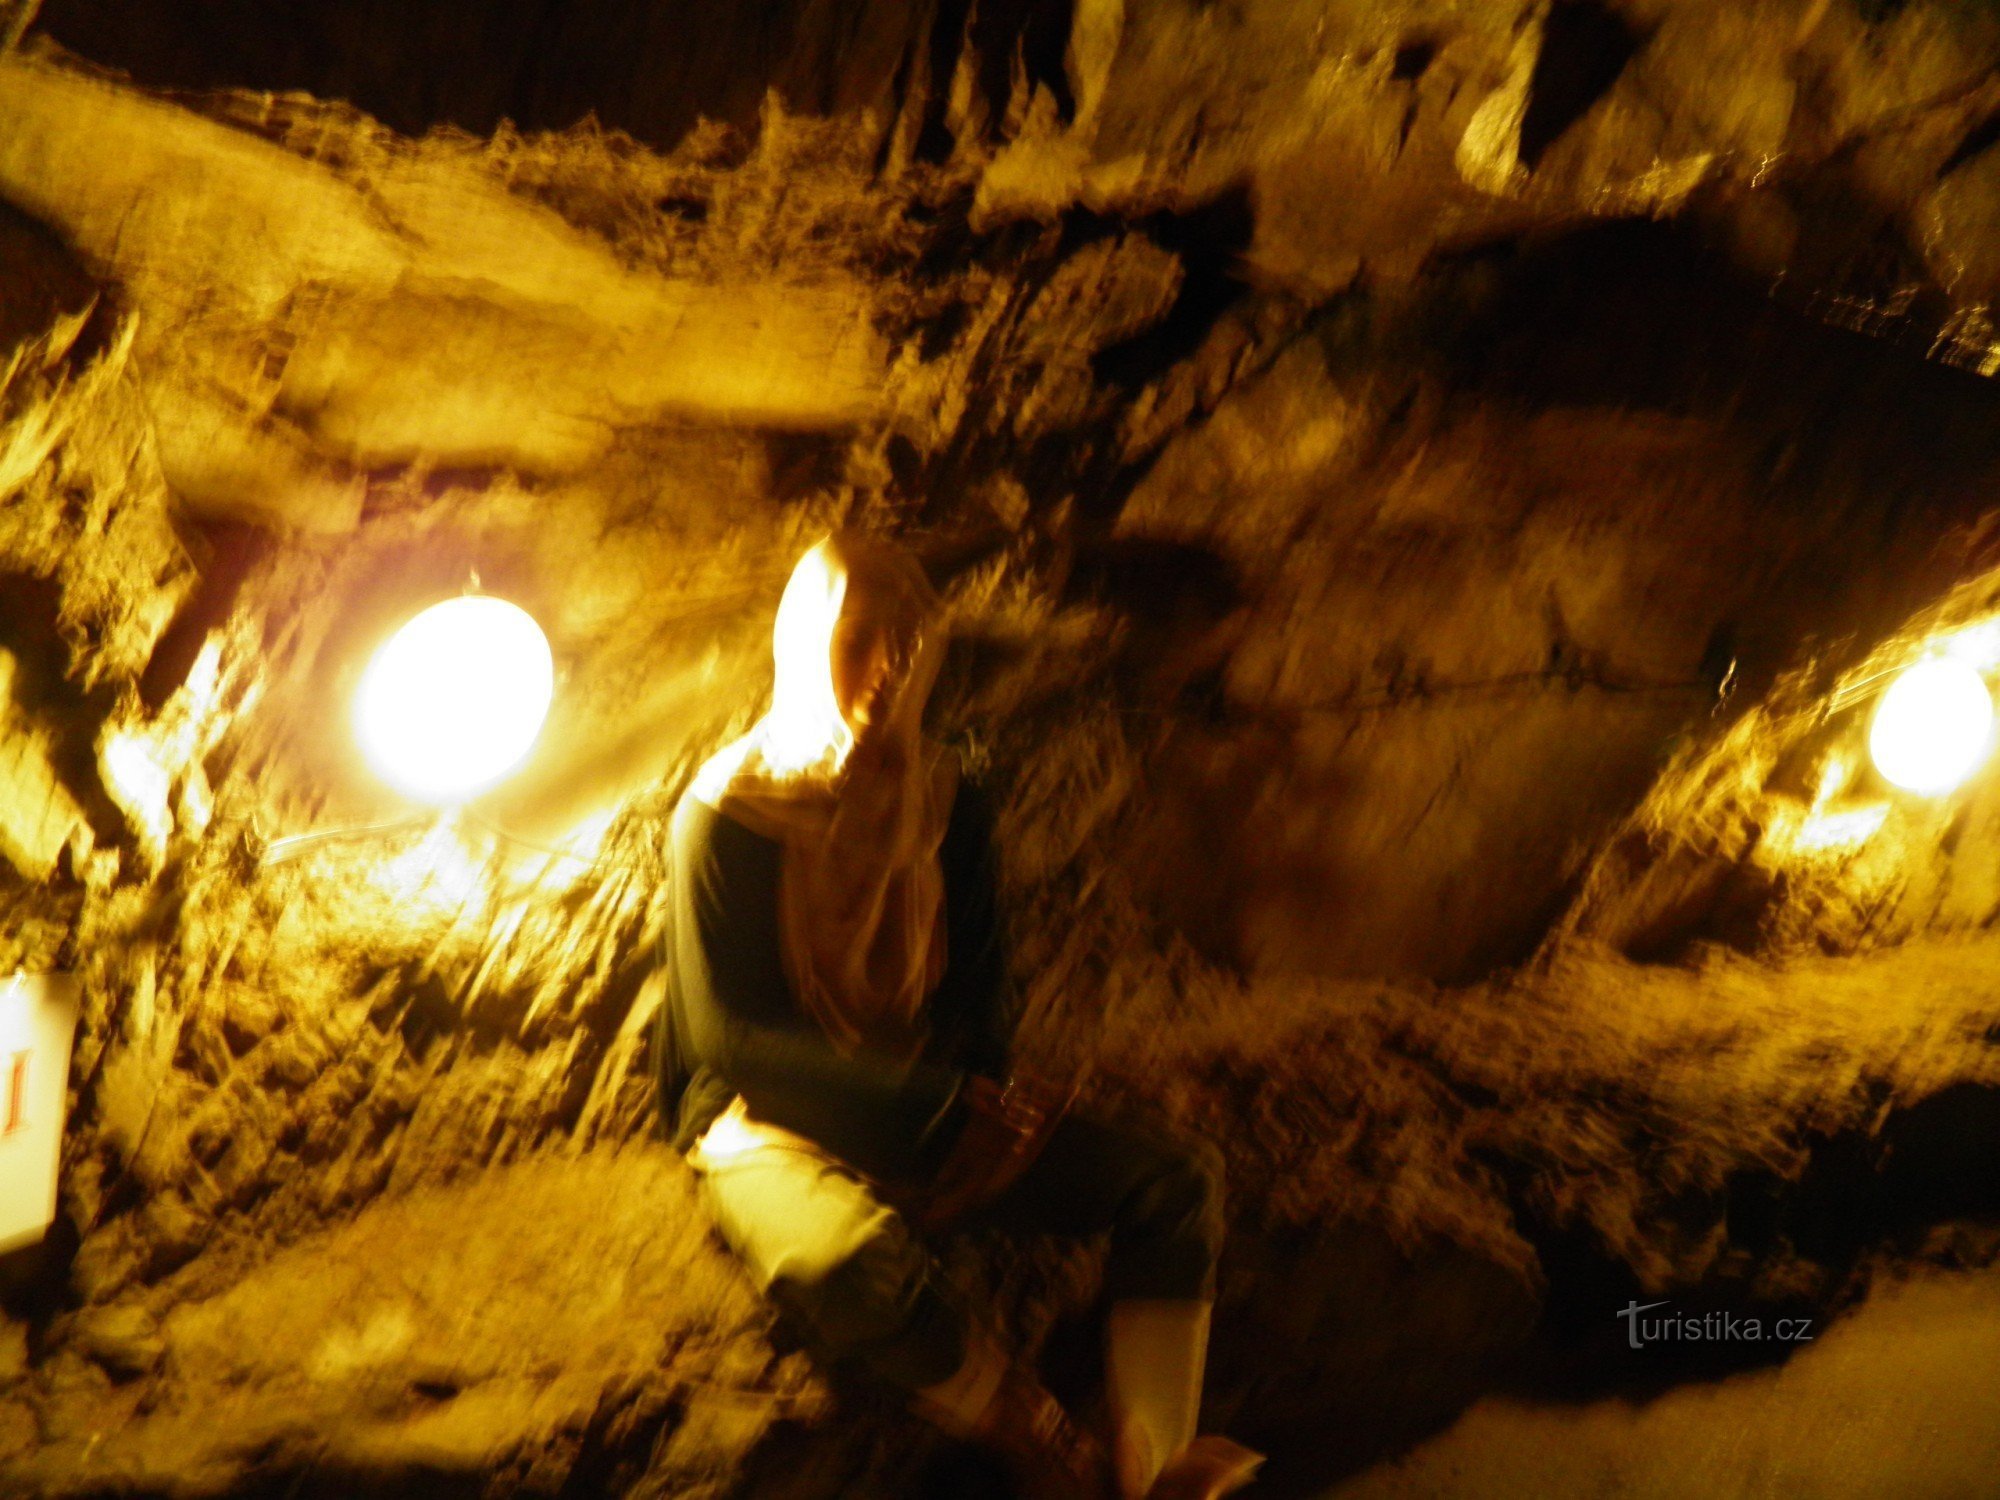 Catacombe din Jihlava.